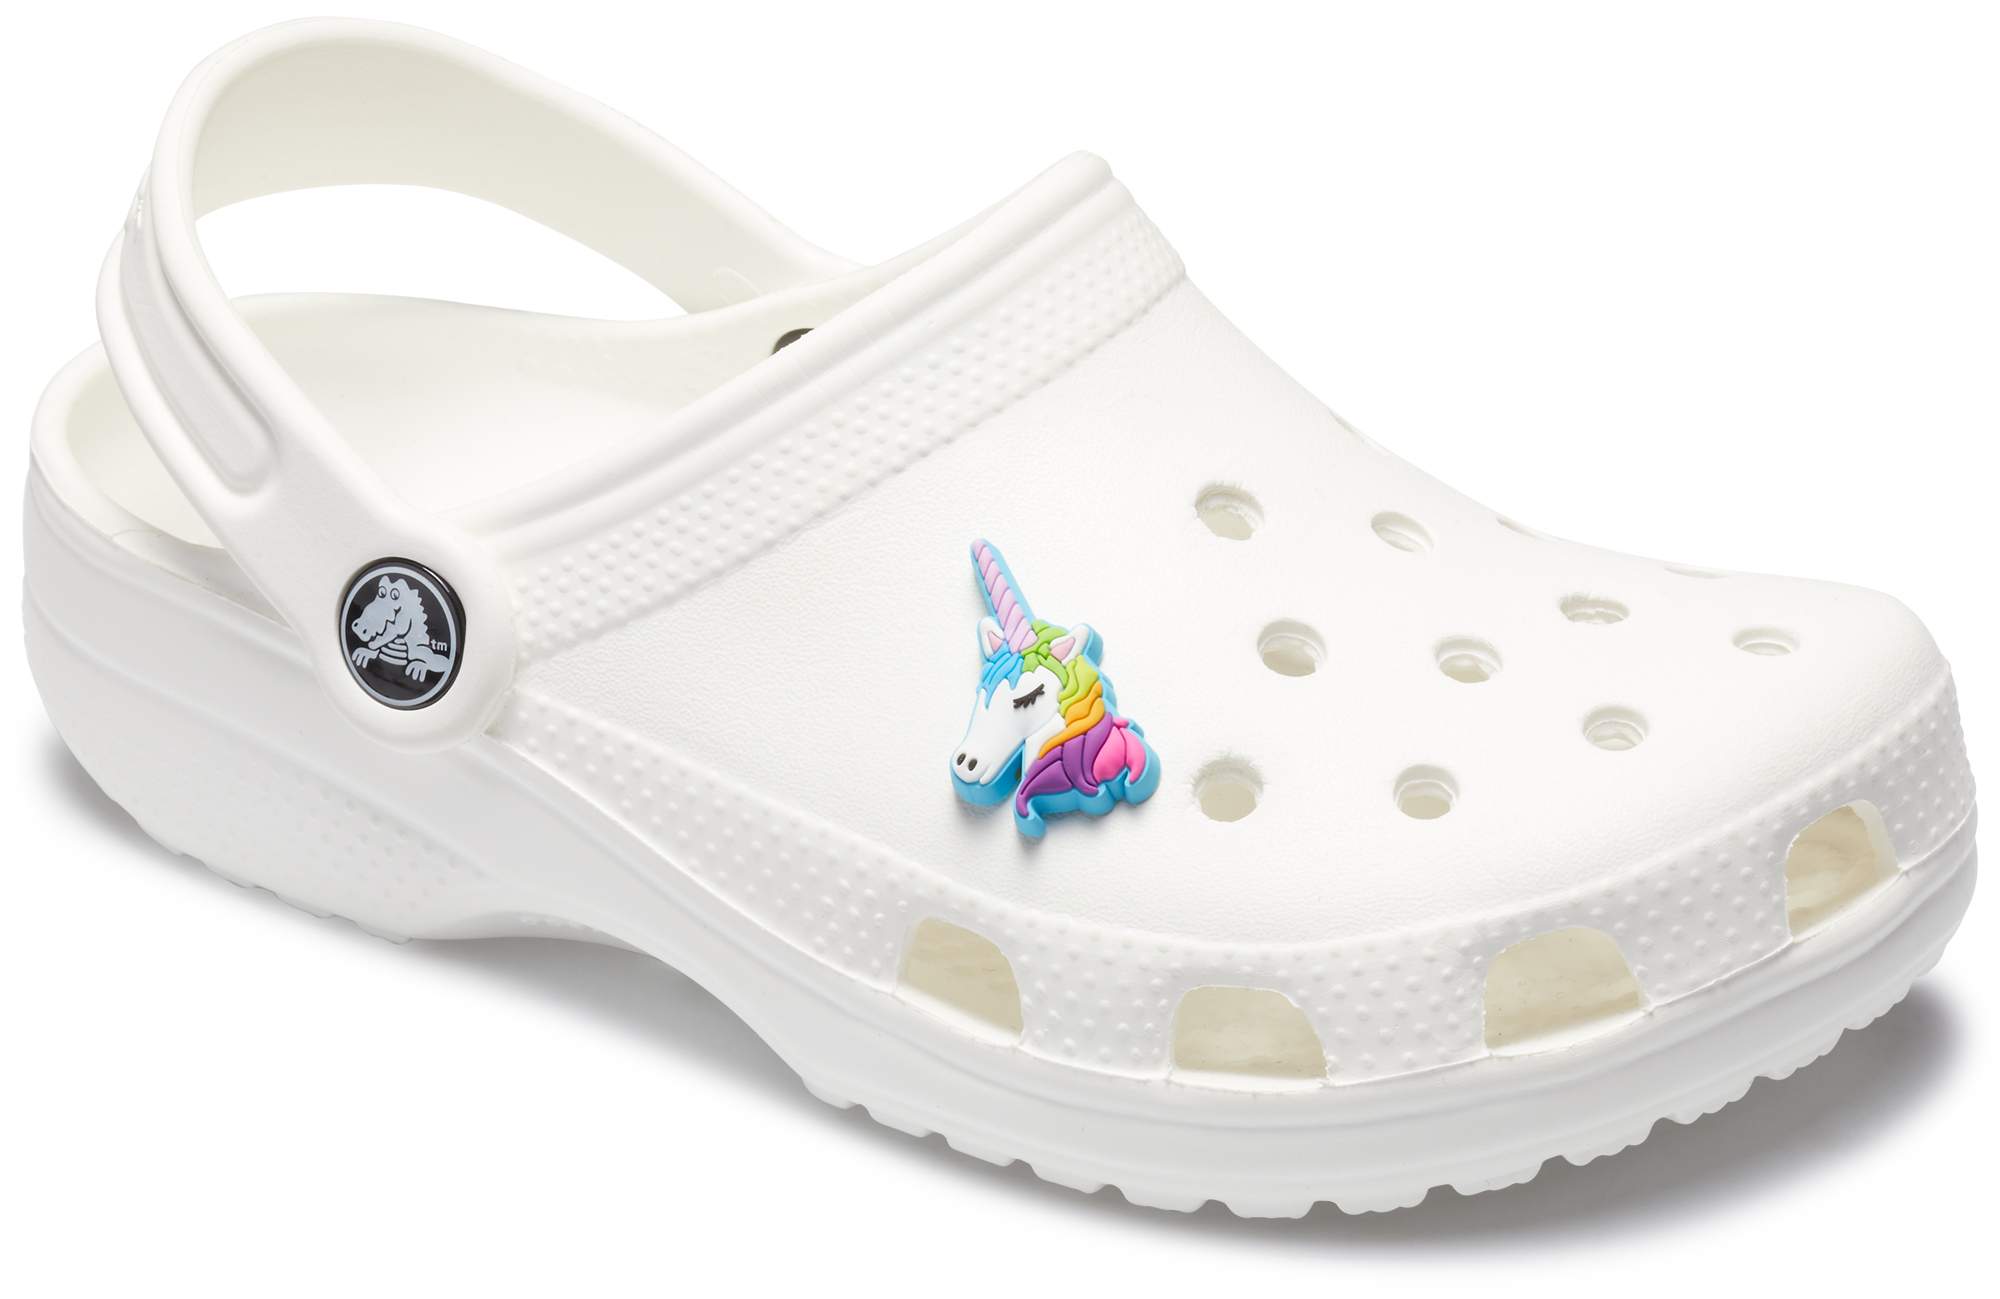 10 Schuh Pins Shoe Charms Anstecker für Crocs Clogs Blumen u.a. 